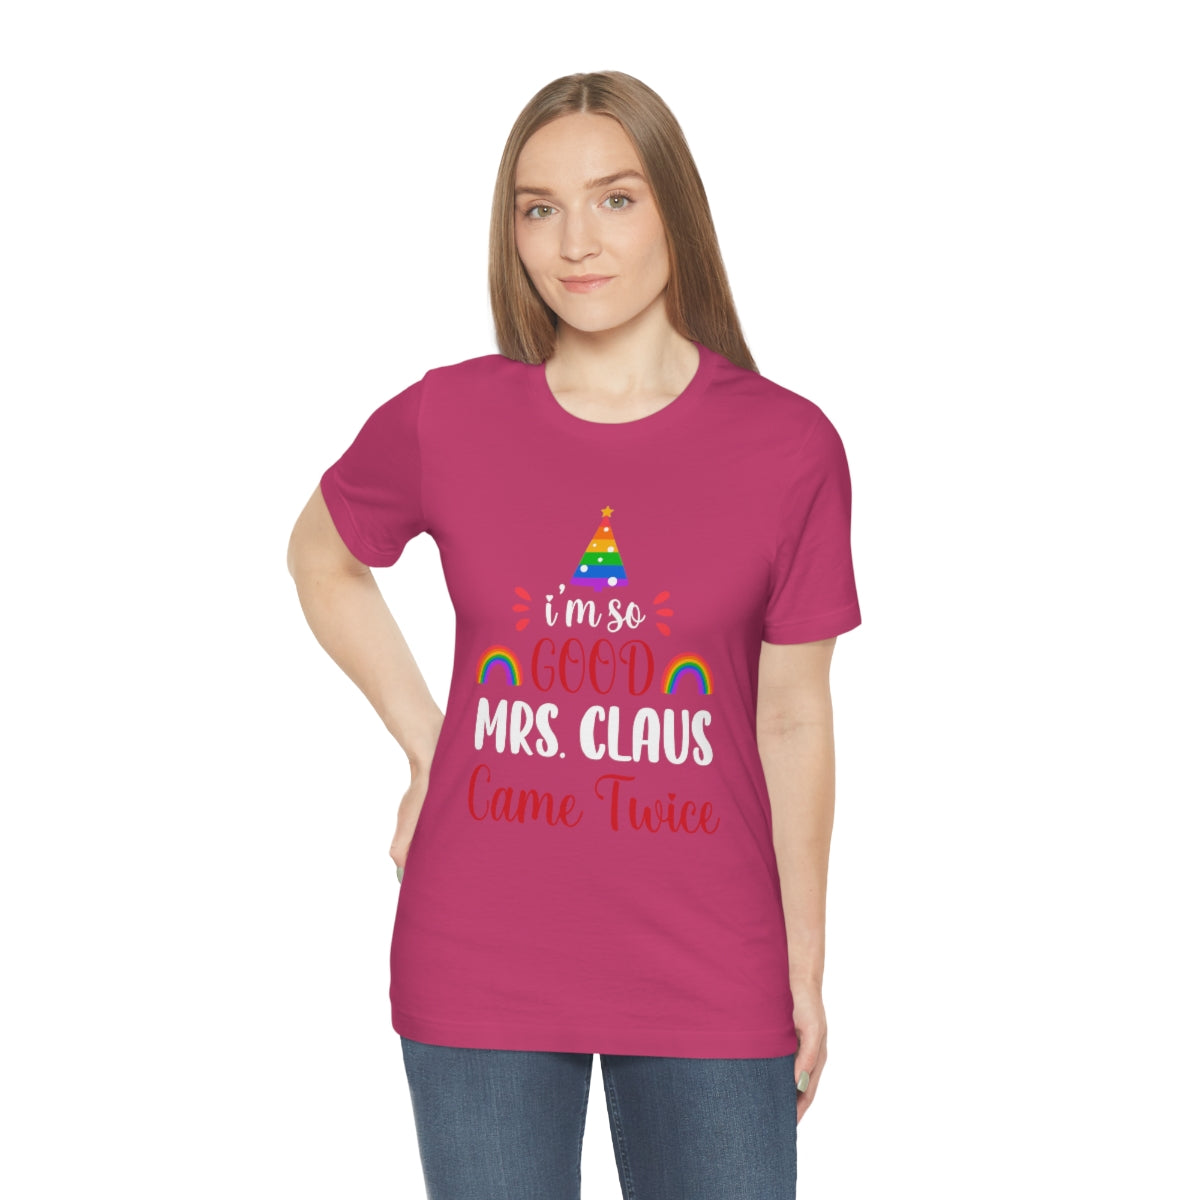 Classic Unisex Christmas LGBTQ T-Shirt - I’M So Good Mrs. Claus Came Twice Printify